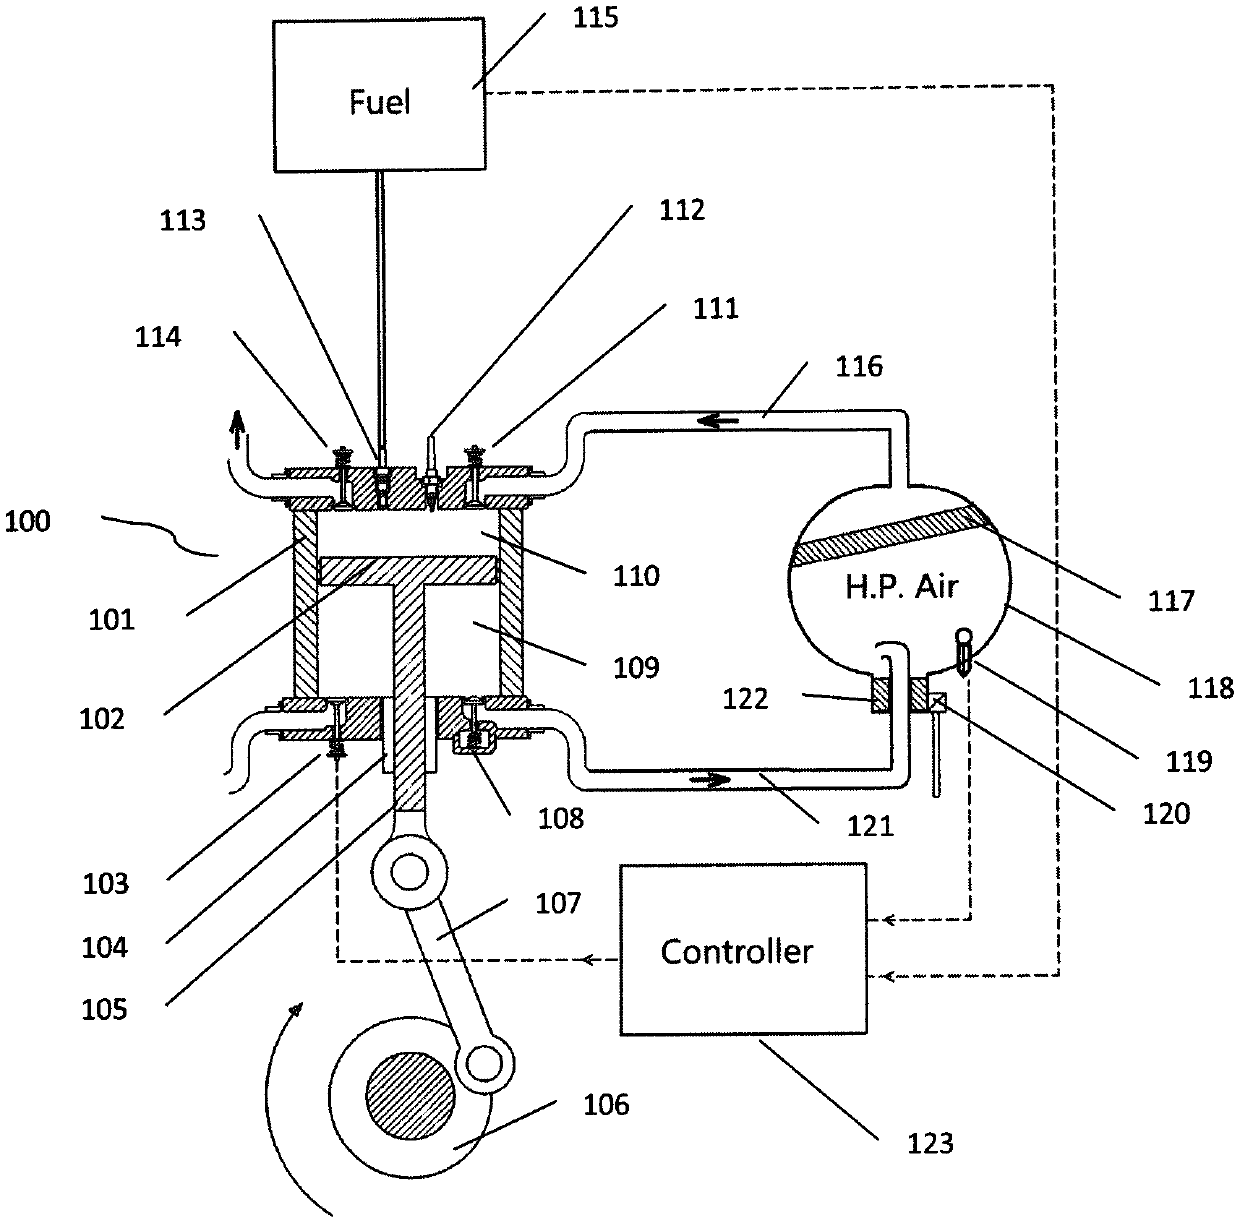 System and method of reciprocating piston engine, multi-fuel piston engine